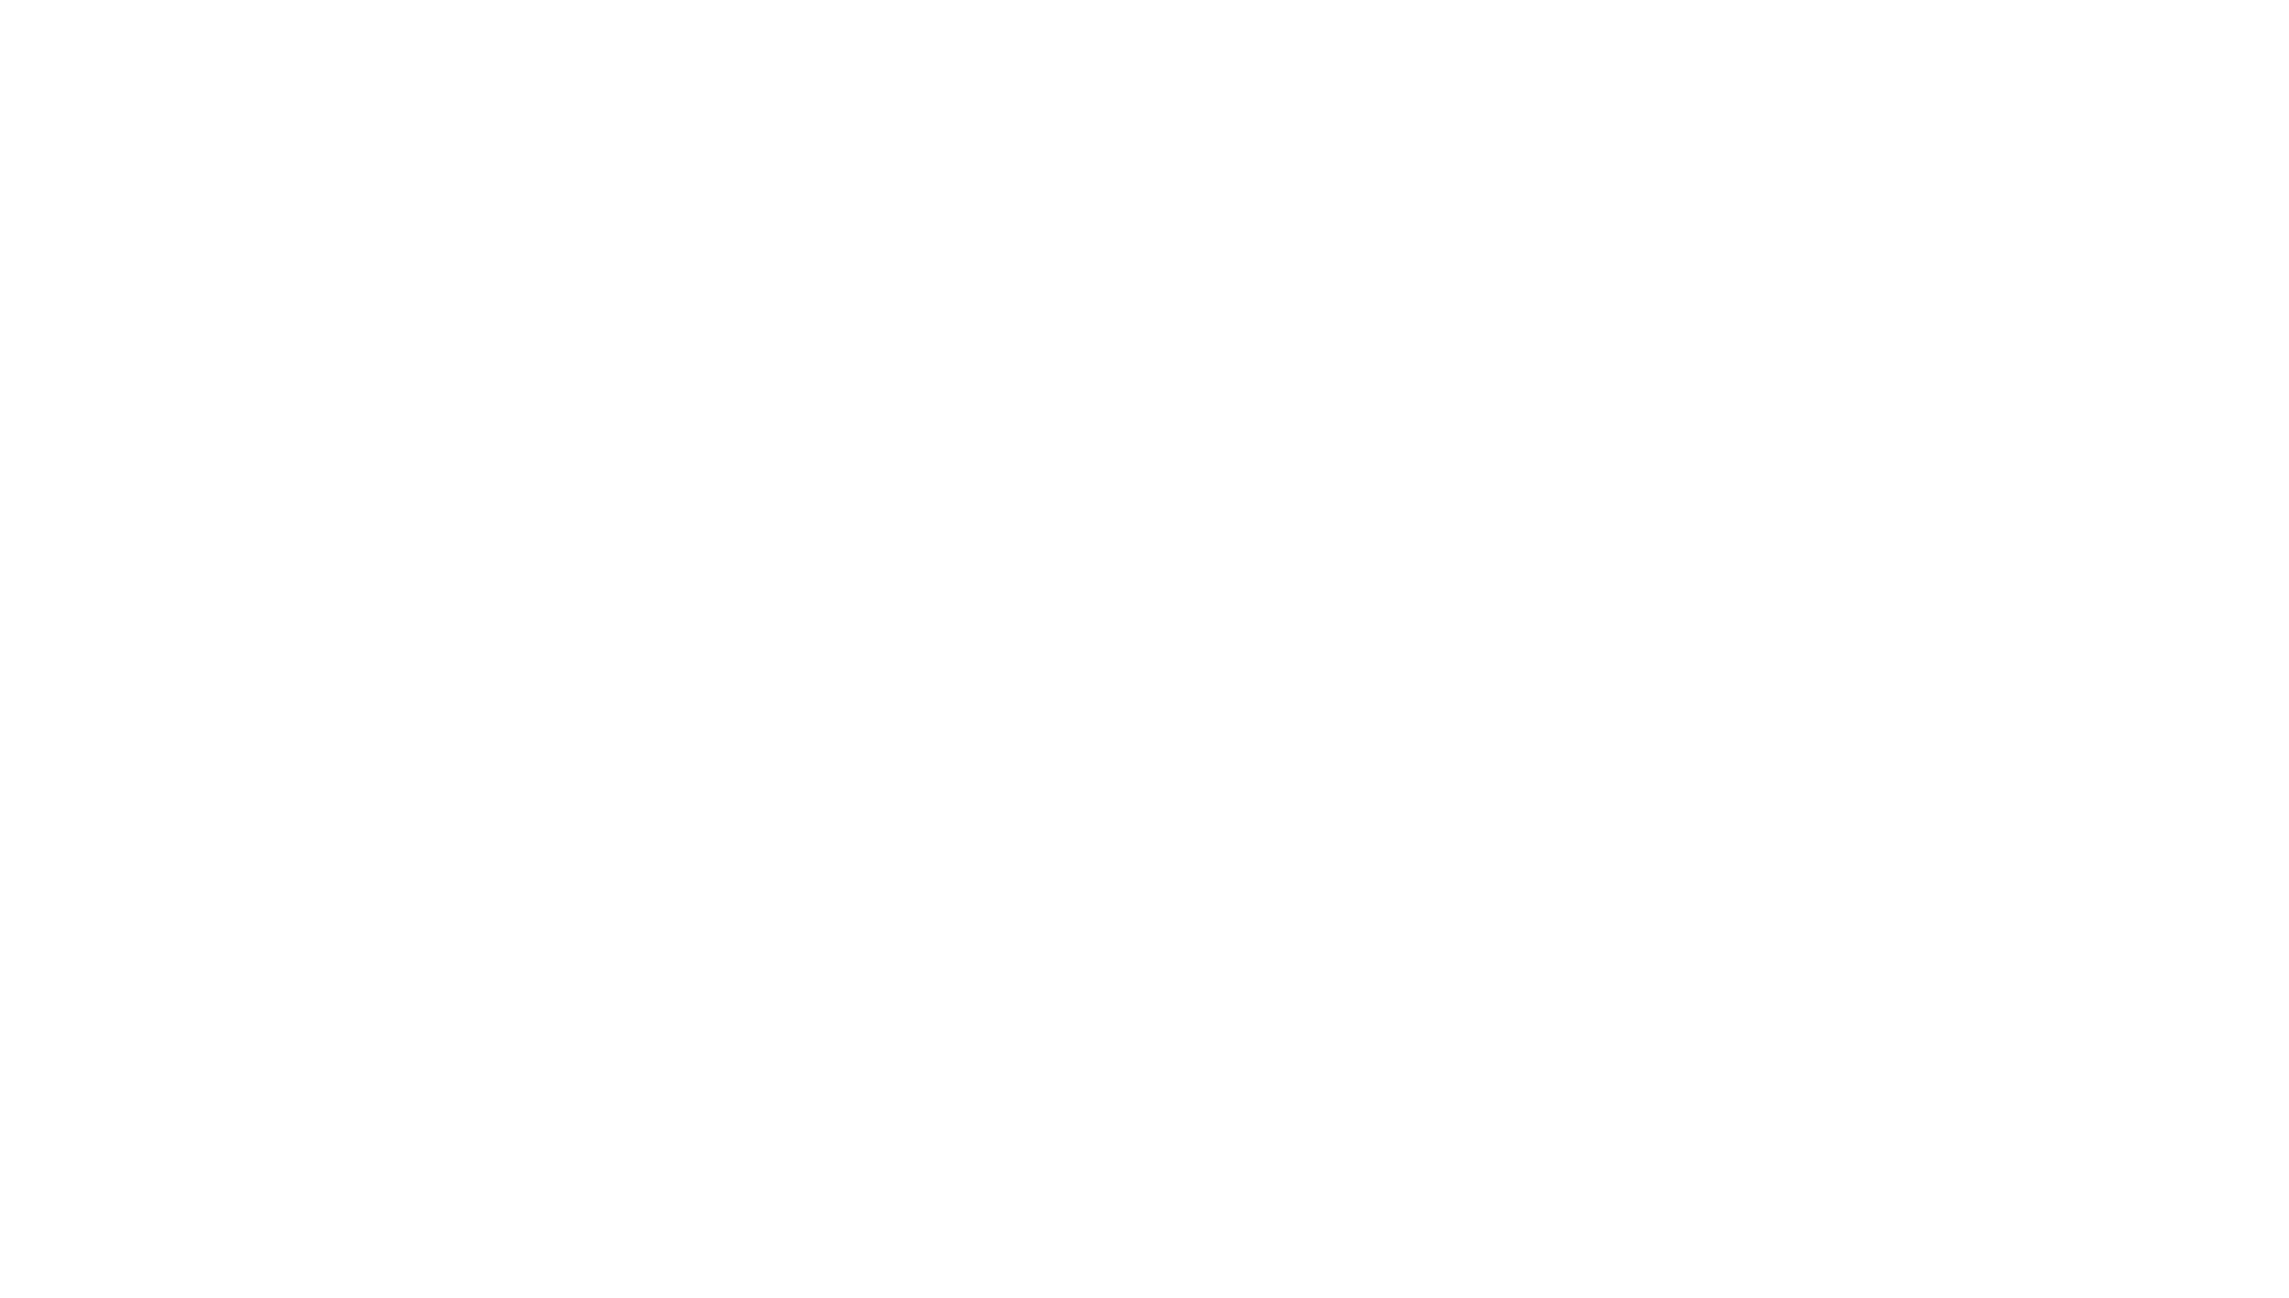 Chueco’s Christmas logo